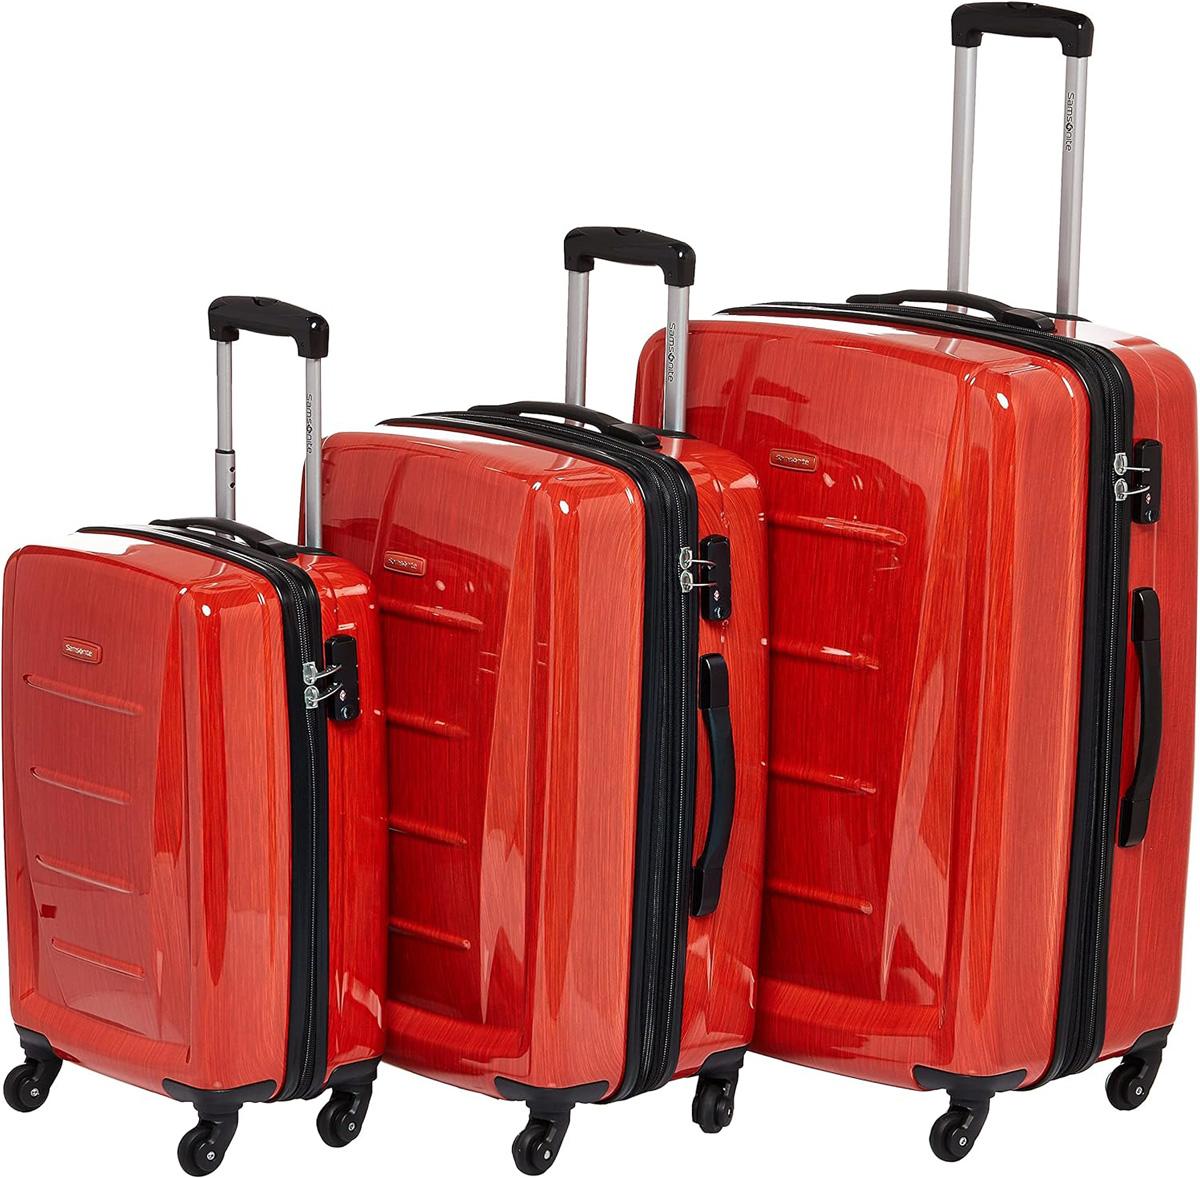 Samsonite Winfield 2 Fashion 3-Piece Spinner Luggage Set for $159.99